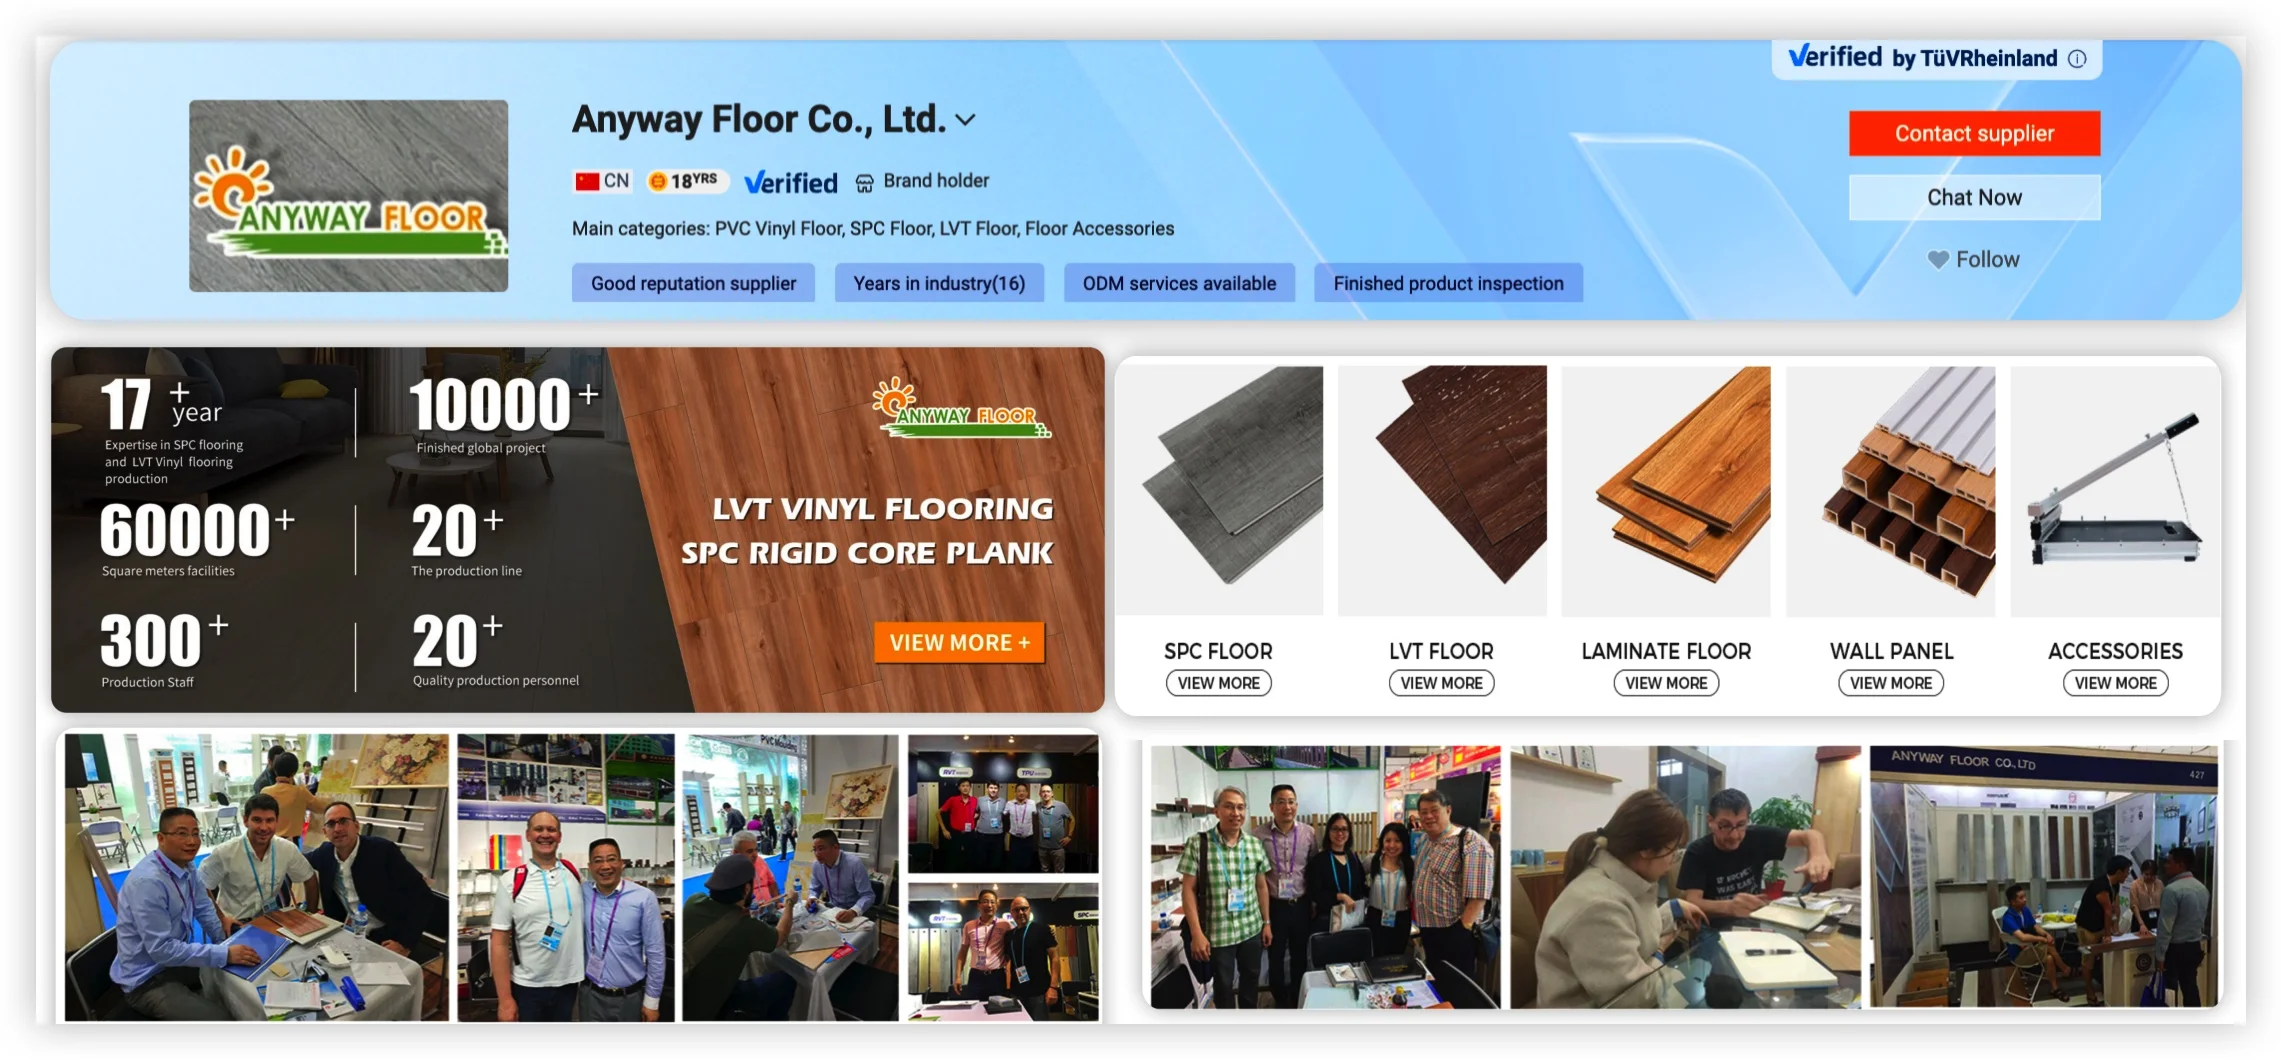 LVT flooring manufacturer and supplier - ANYWAY FLOOR